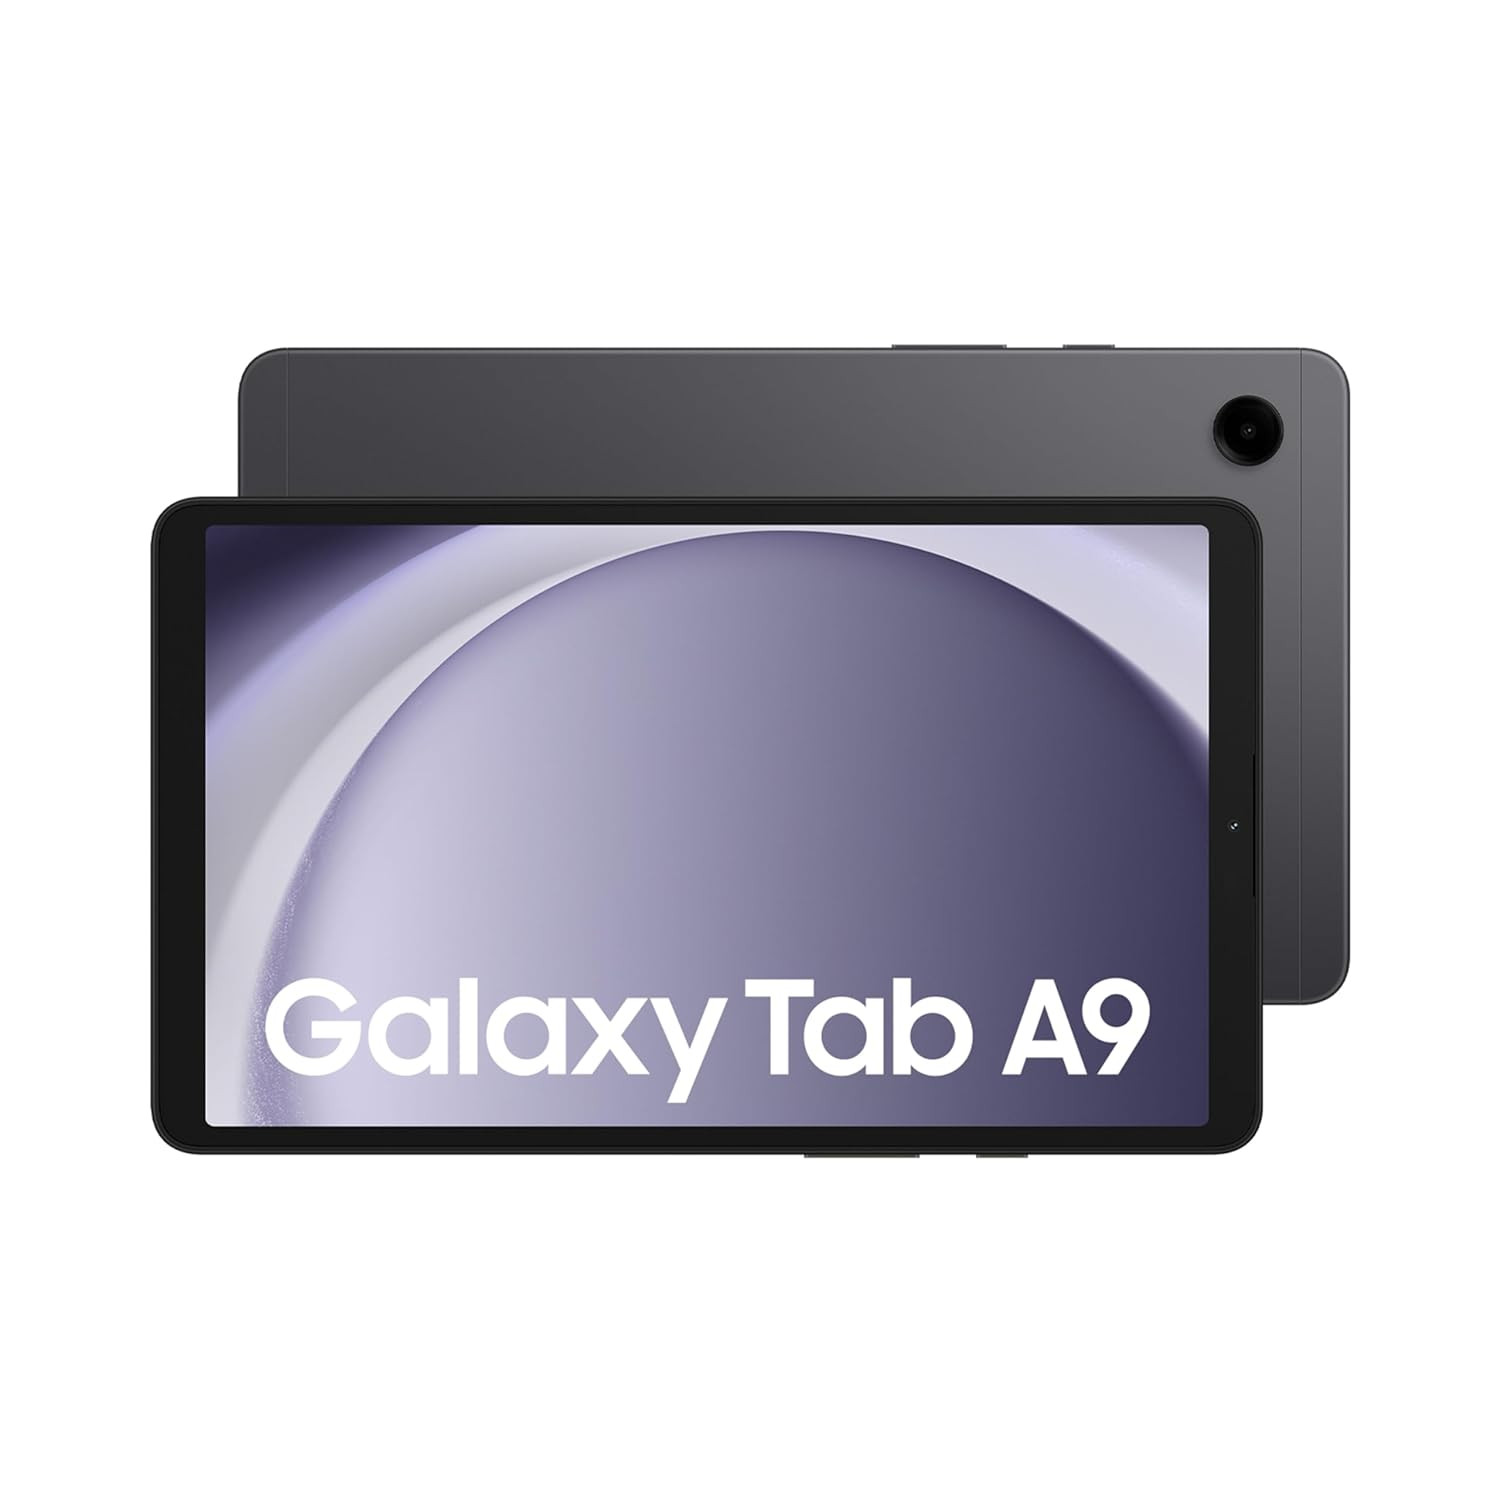 Samsung Galaxy Tab A9 22.10 cm (8.7 inch) Display, RAM 4 GB, ROM 64 GB Expandable, Wi-Fi Table